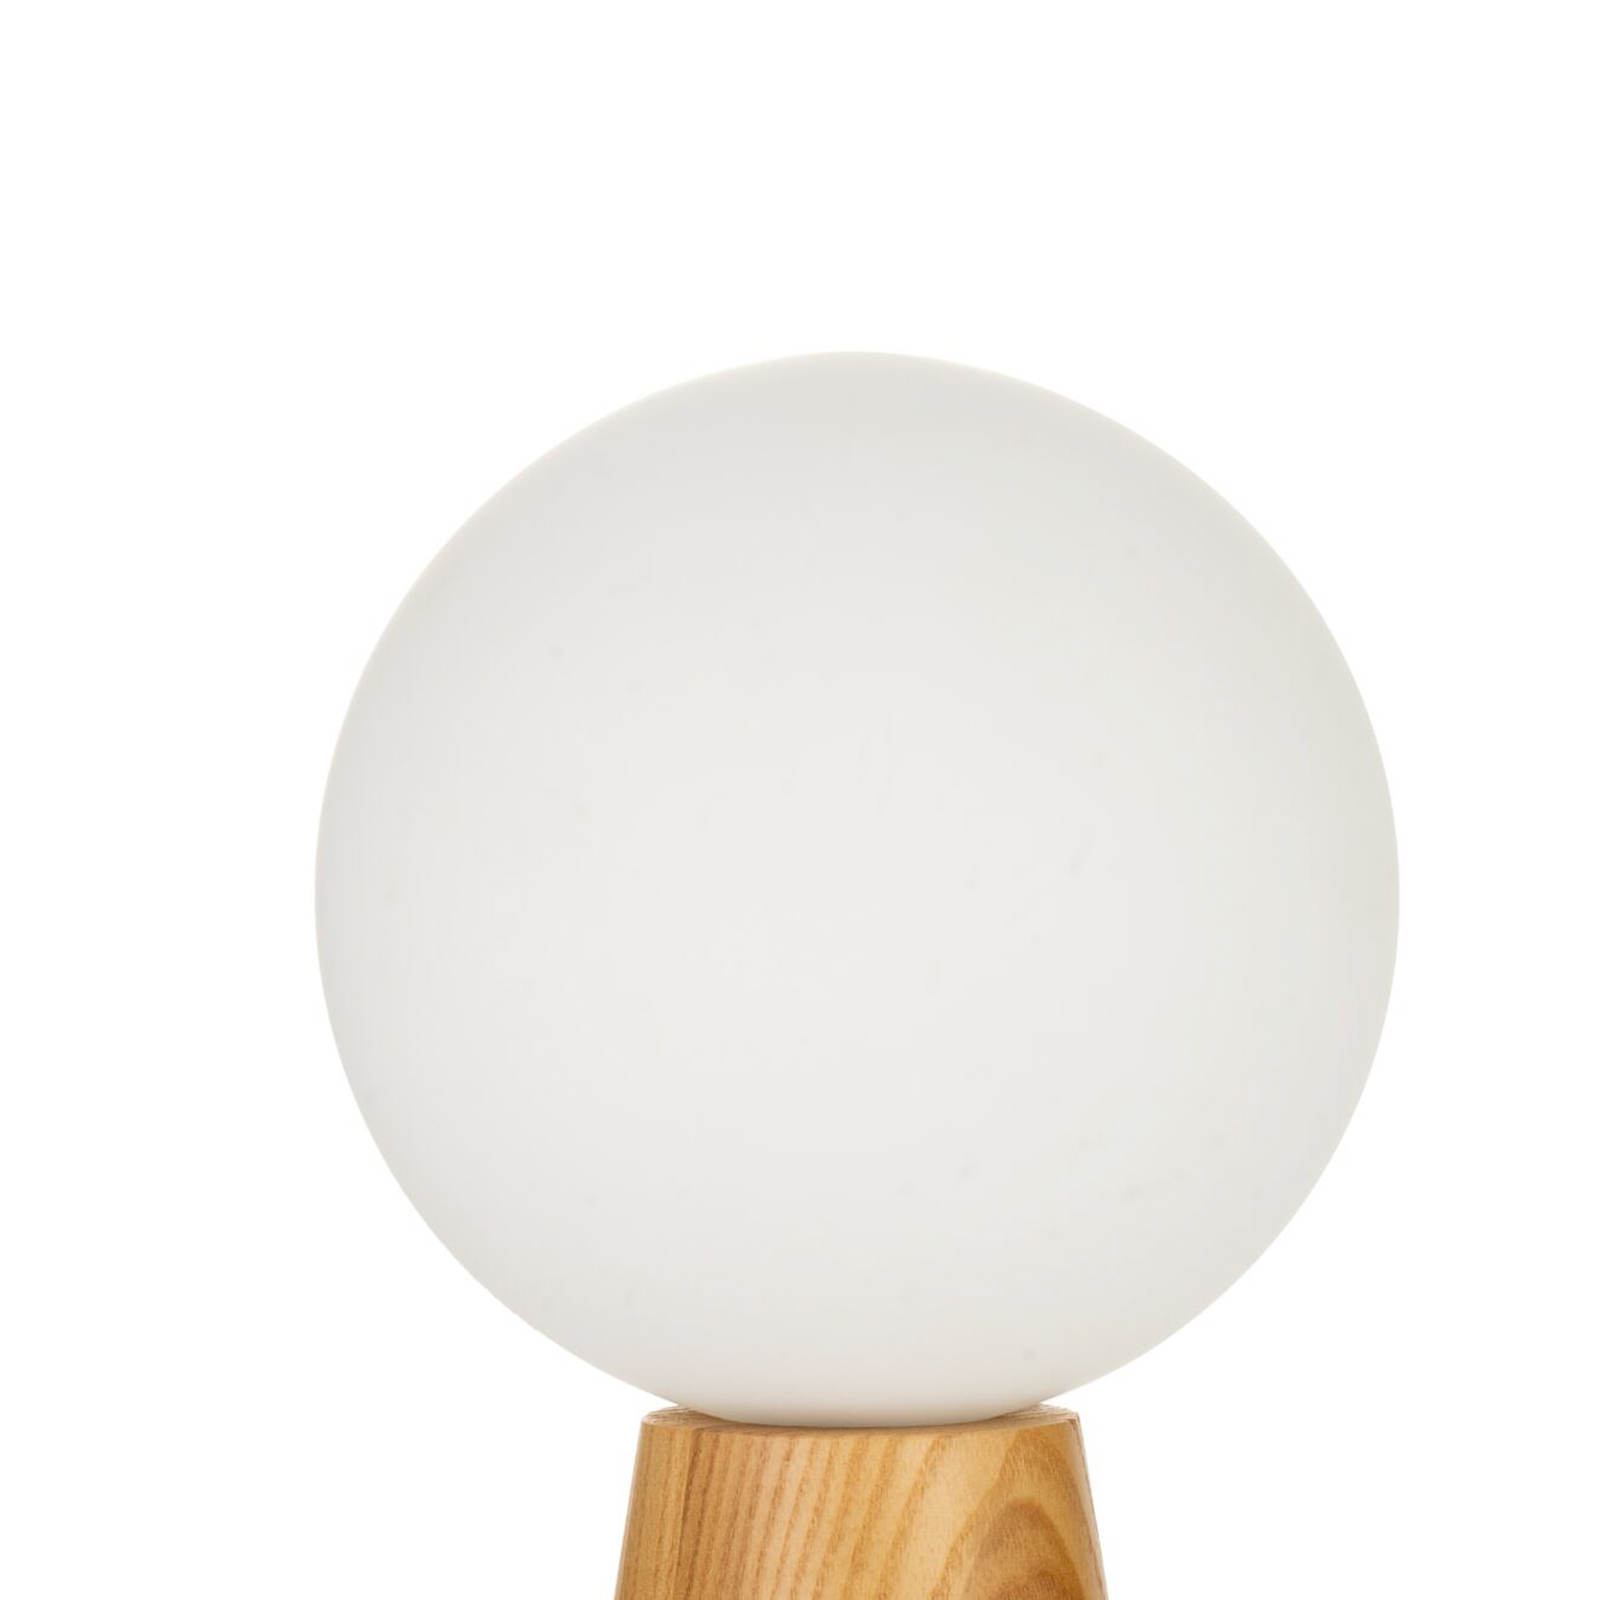 Pauleen Woody Soul bordlampe, træfod, glaskugle